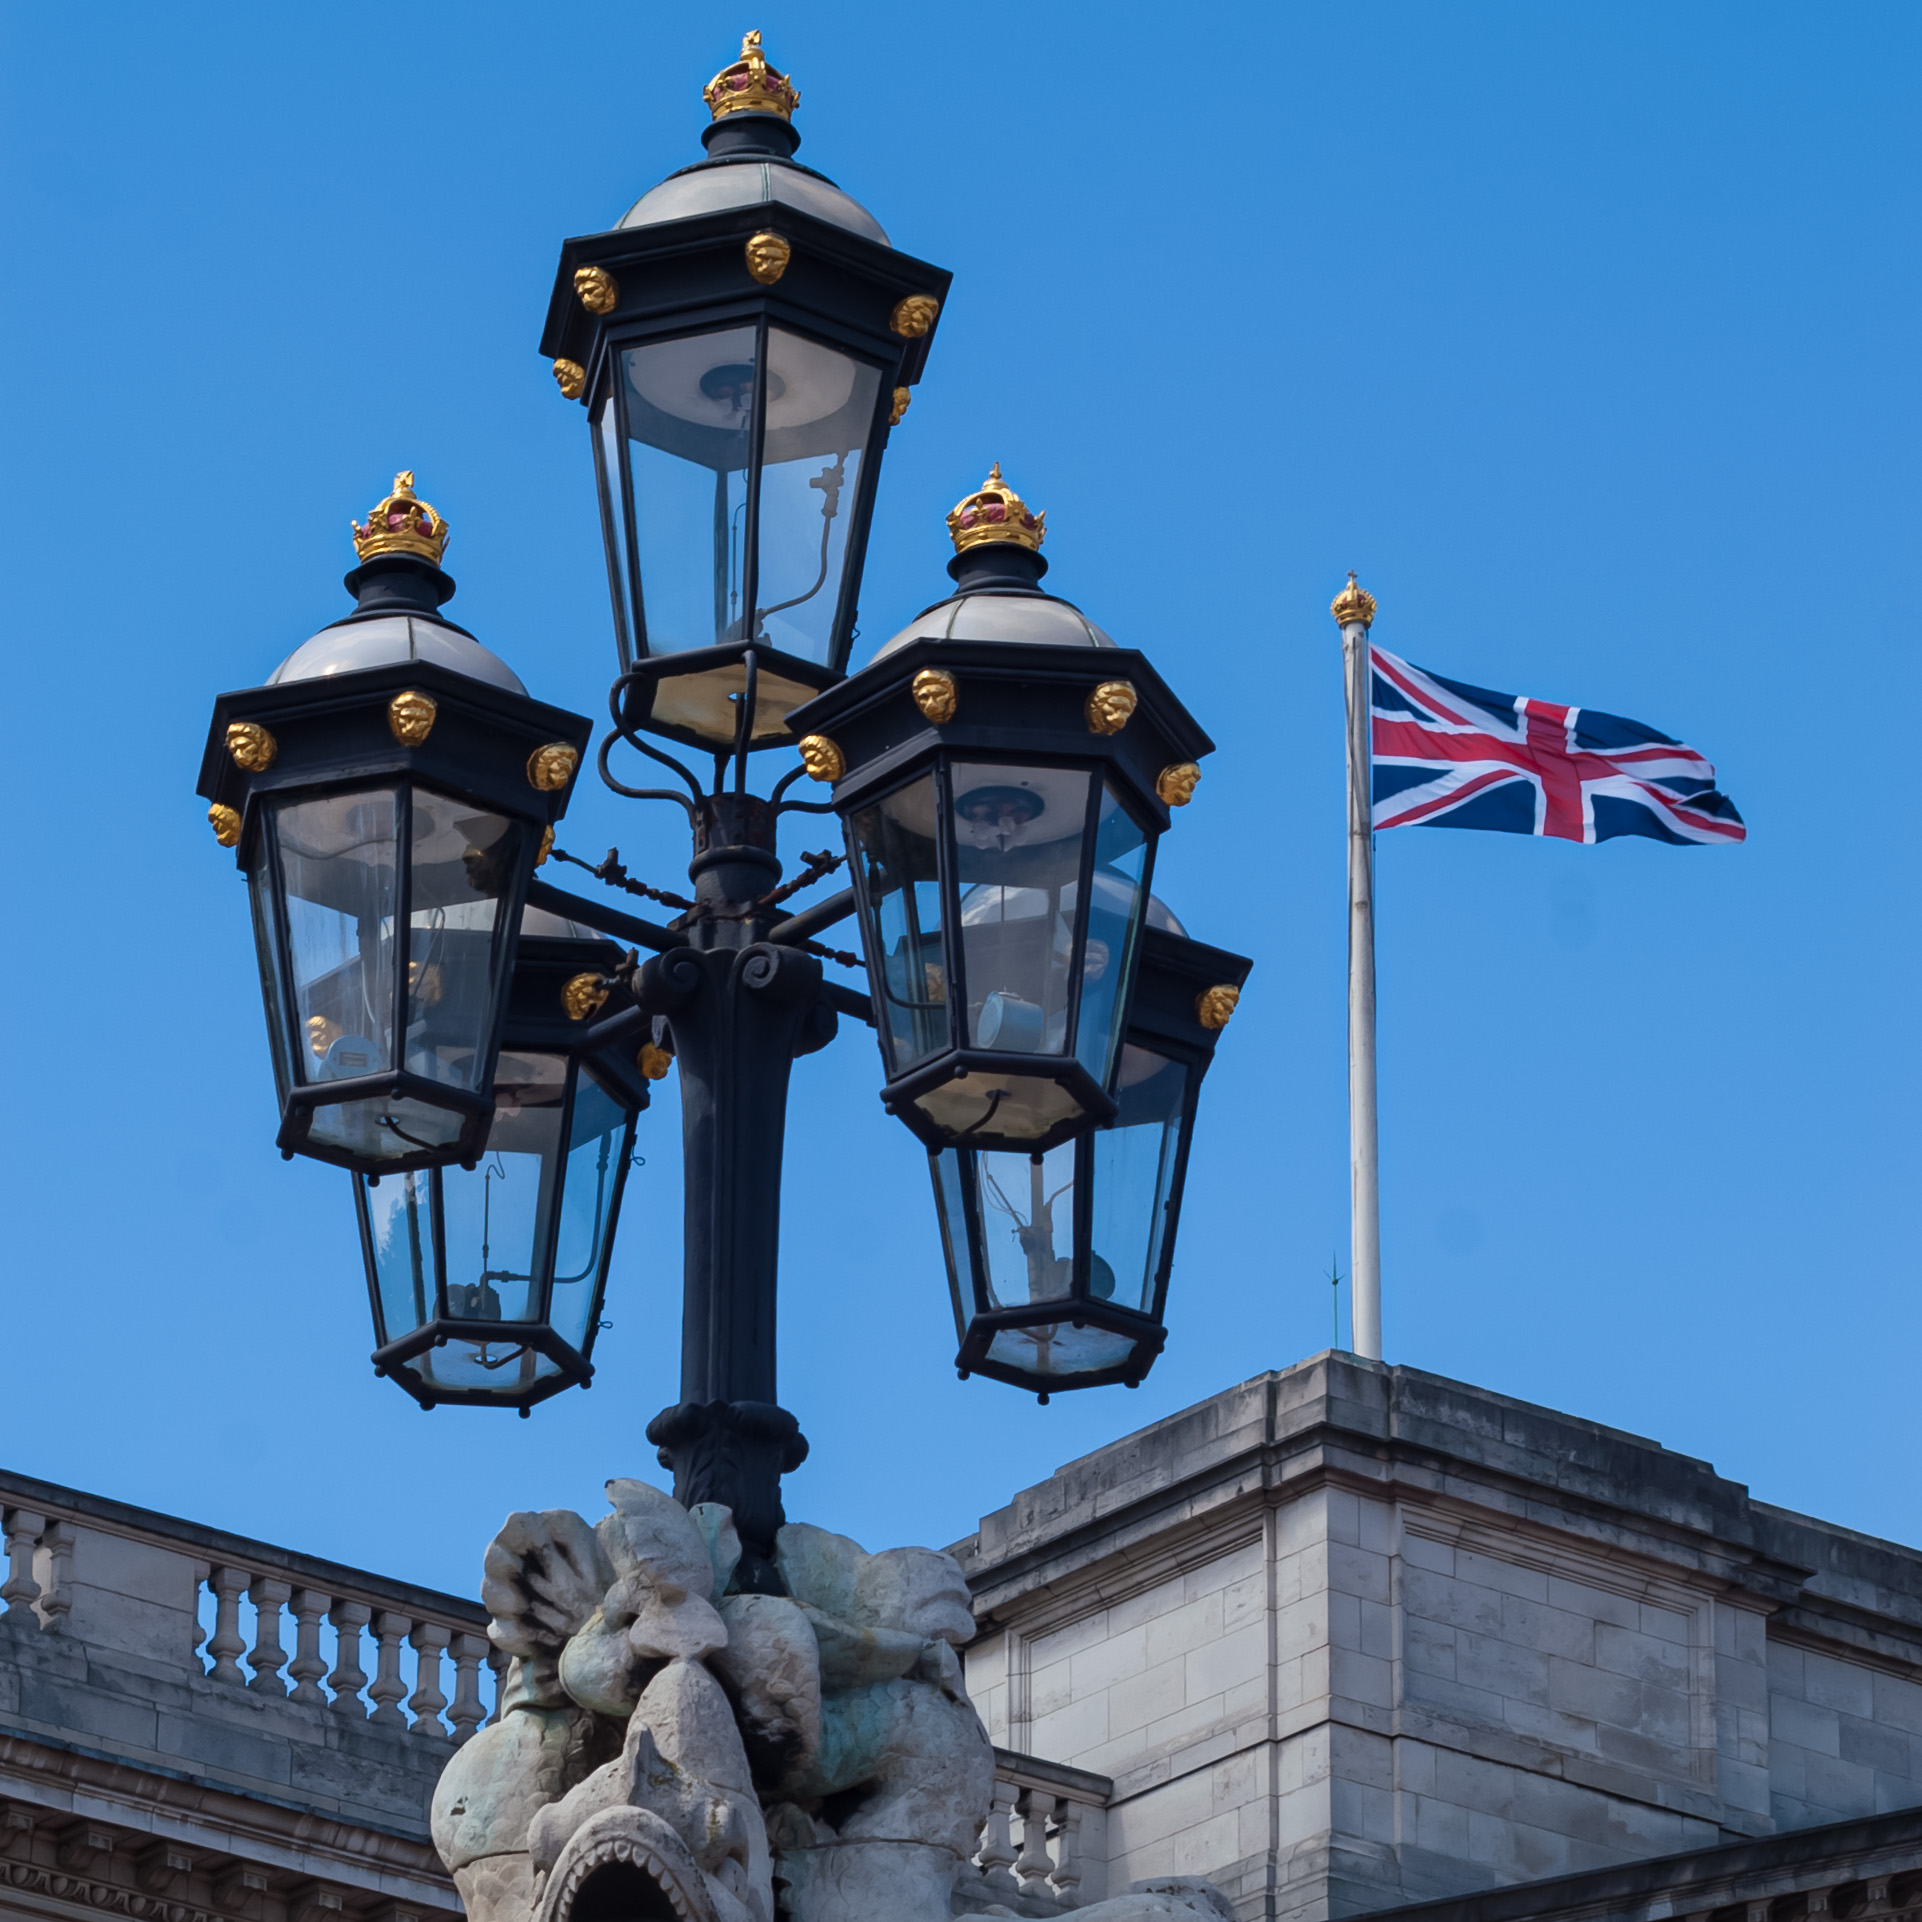 London - Union Jack